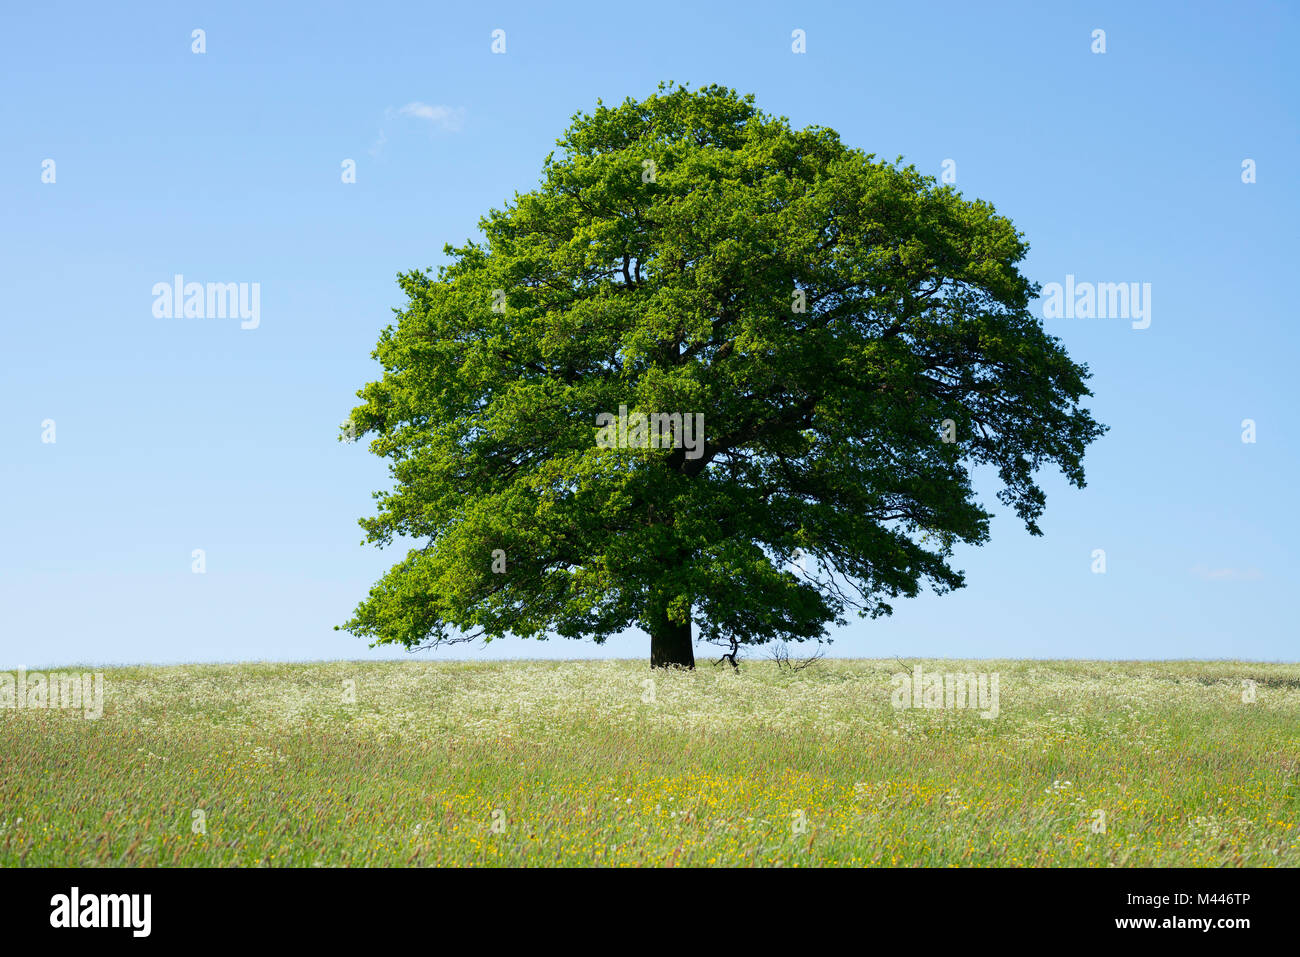 Vecchio inglese quercia (Quercus robur) nel prato in fiore,albero solitario,Turingia,Germania Foto Stock